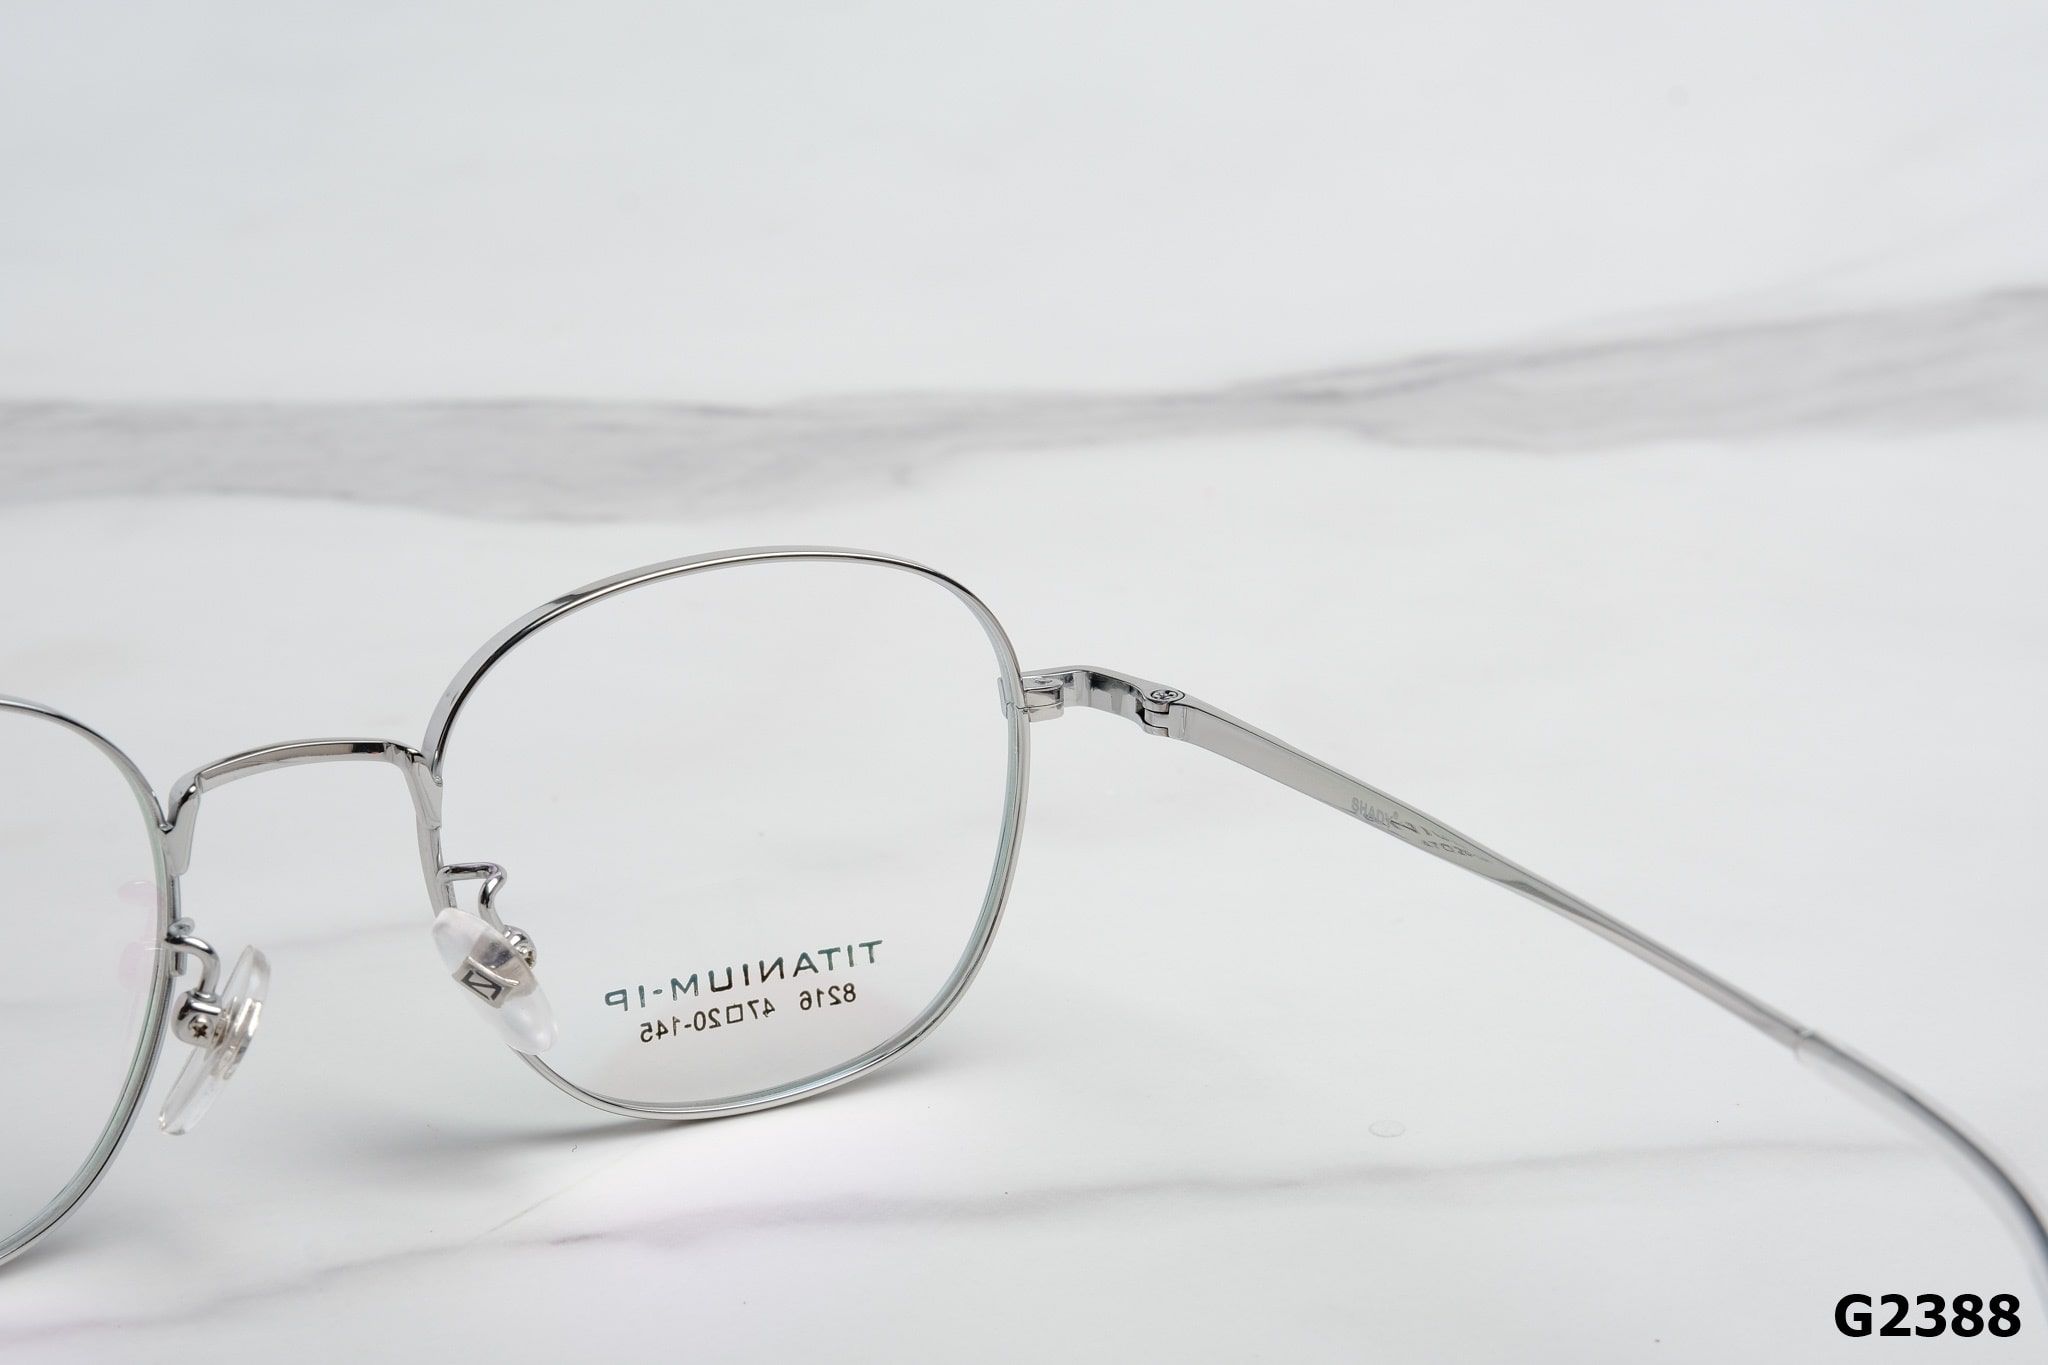  SHADY Eyewear - Glasses - G2388 